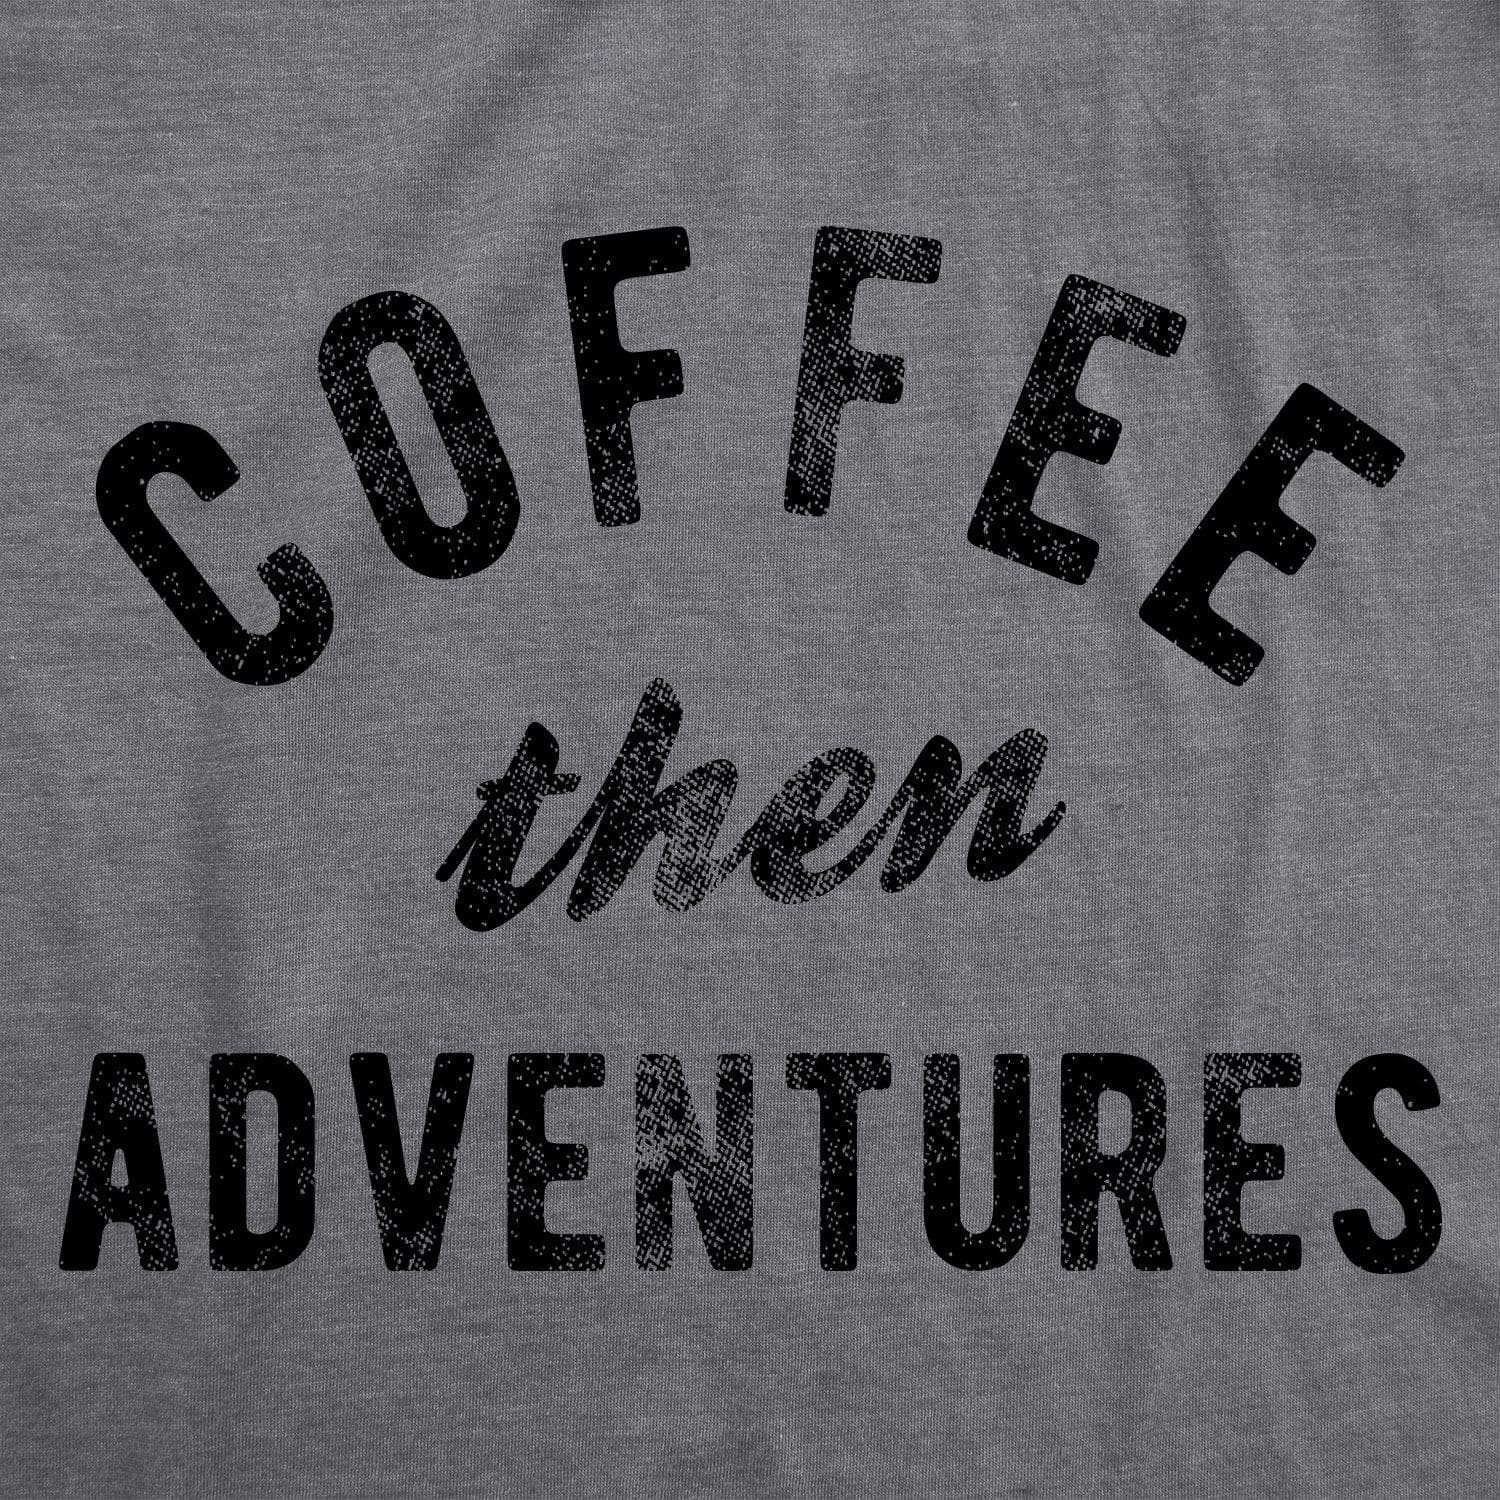 Coffee Then Adventures Men's Tshirt  -  Crazy Dog T-Shirts